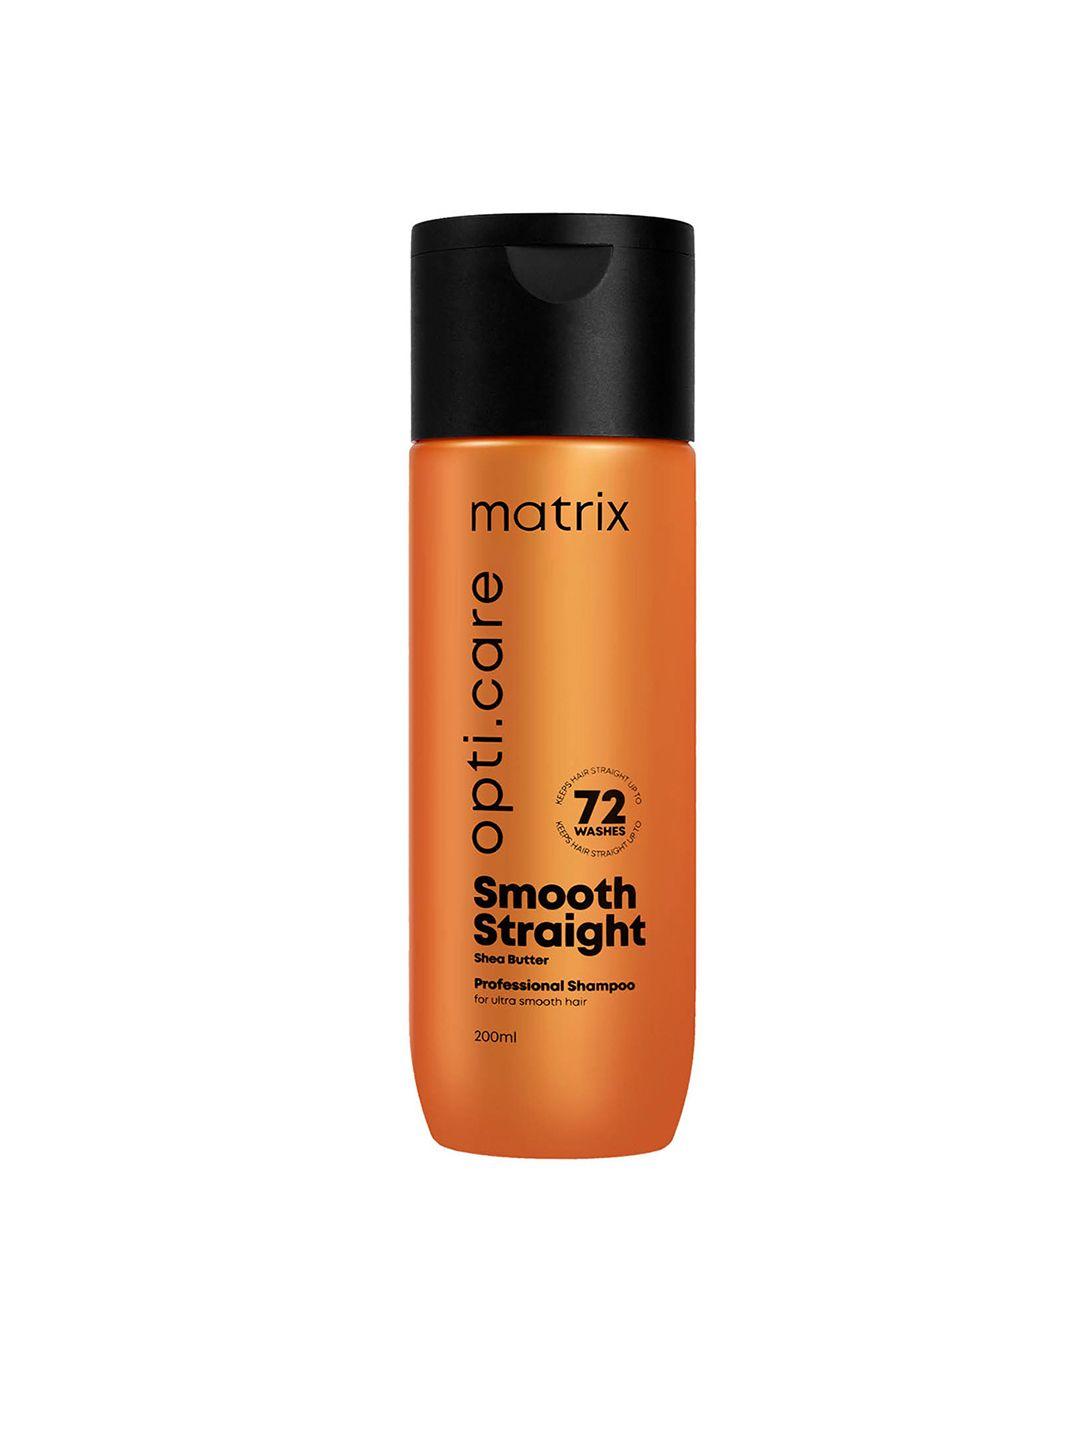 matrix-opti-care-smooth-straight-professional-shampoo-with-shea-butter---200ml